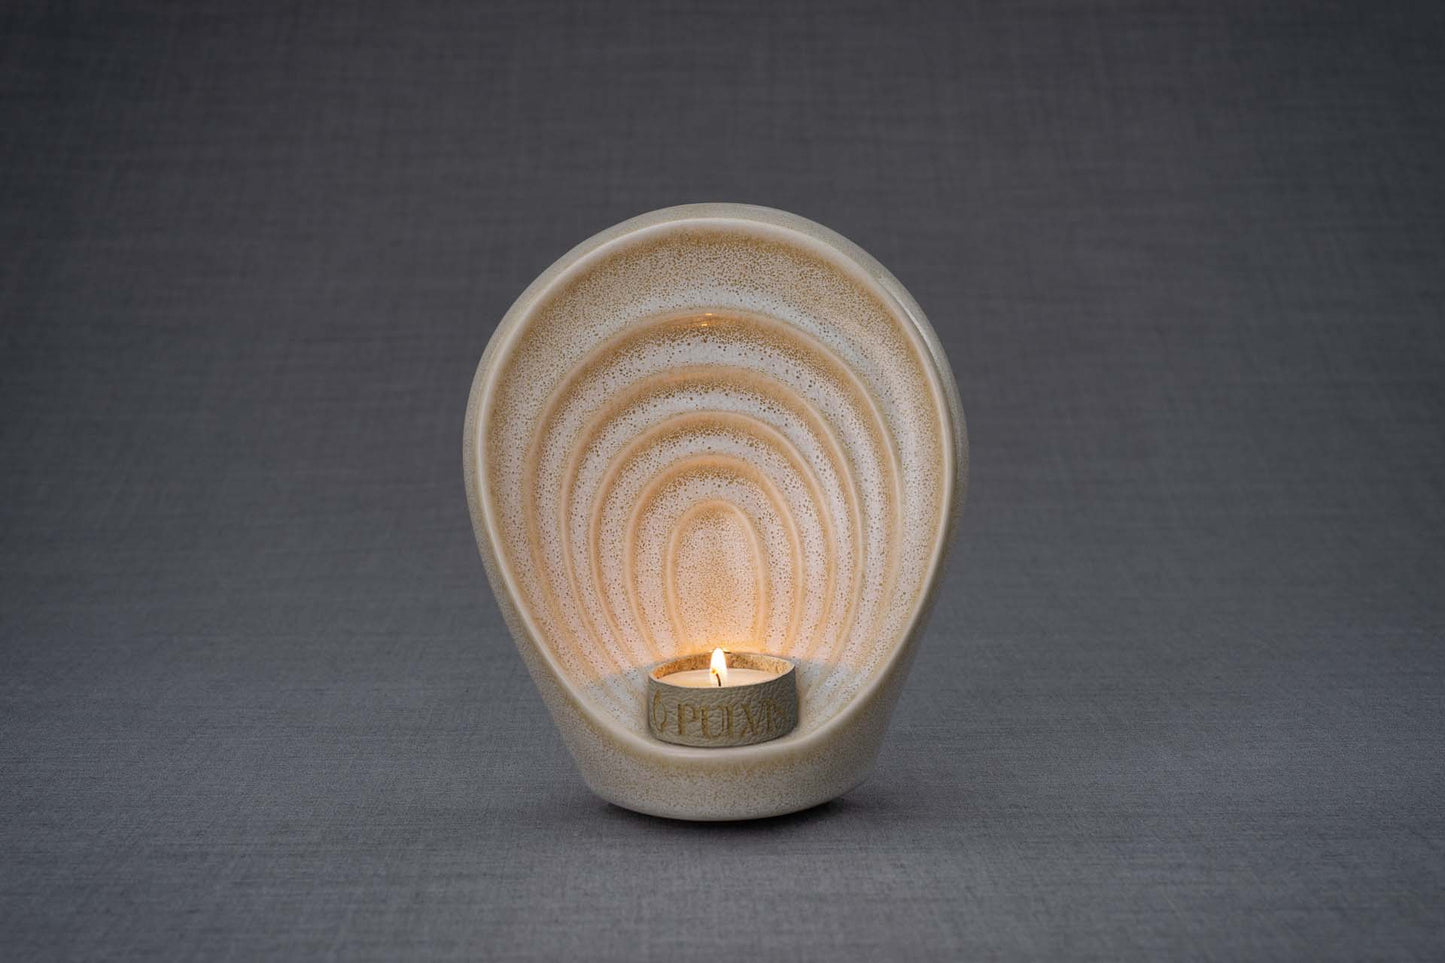 Pulvis Art Urns Keepsake Urn Handmade Cremation Keepsake Urn "Guardian" - Small | Light Sand Melange | Ceramic